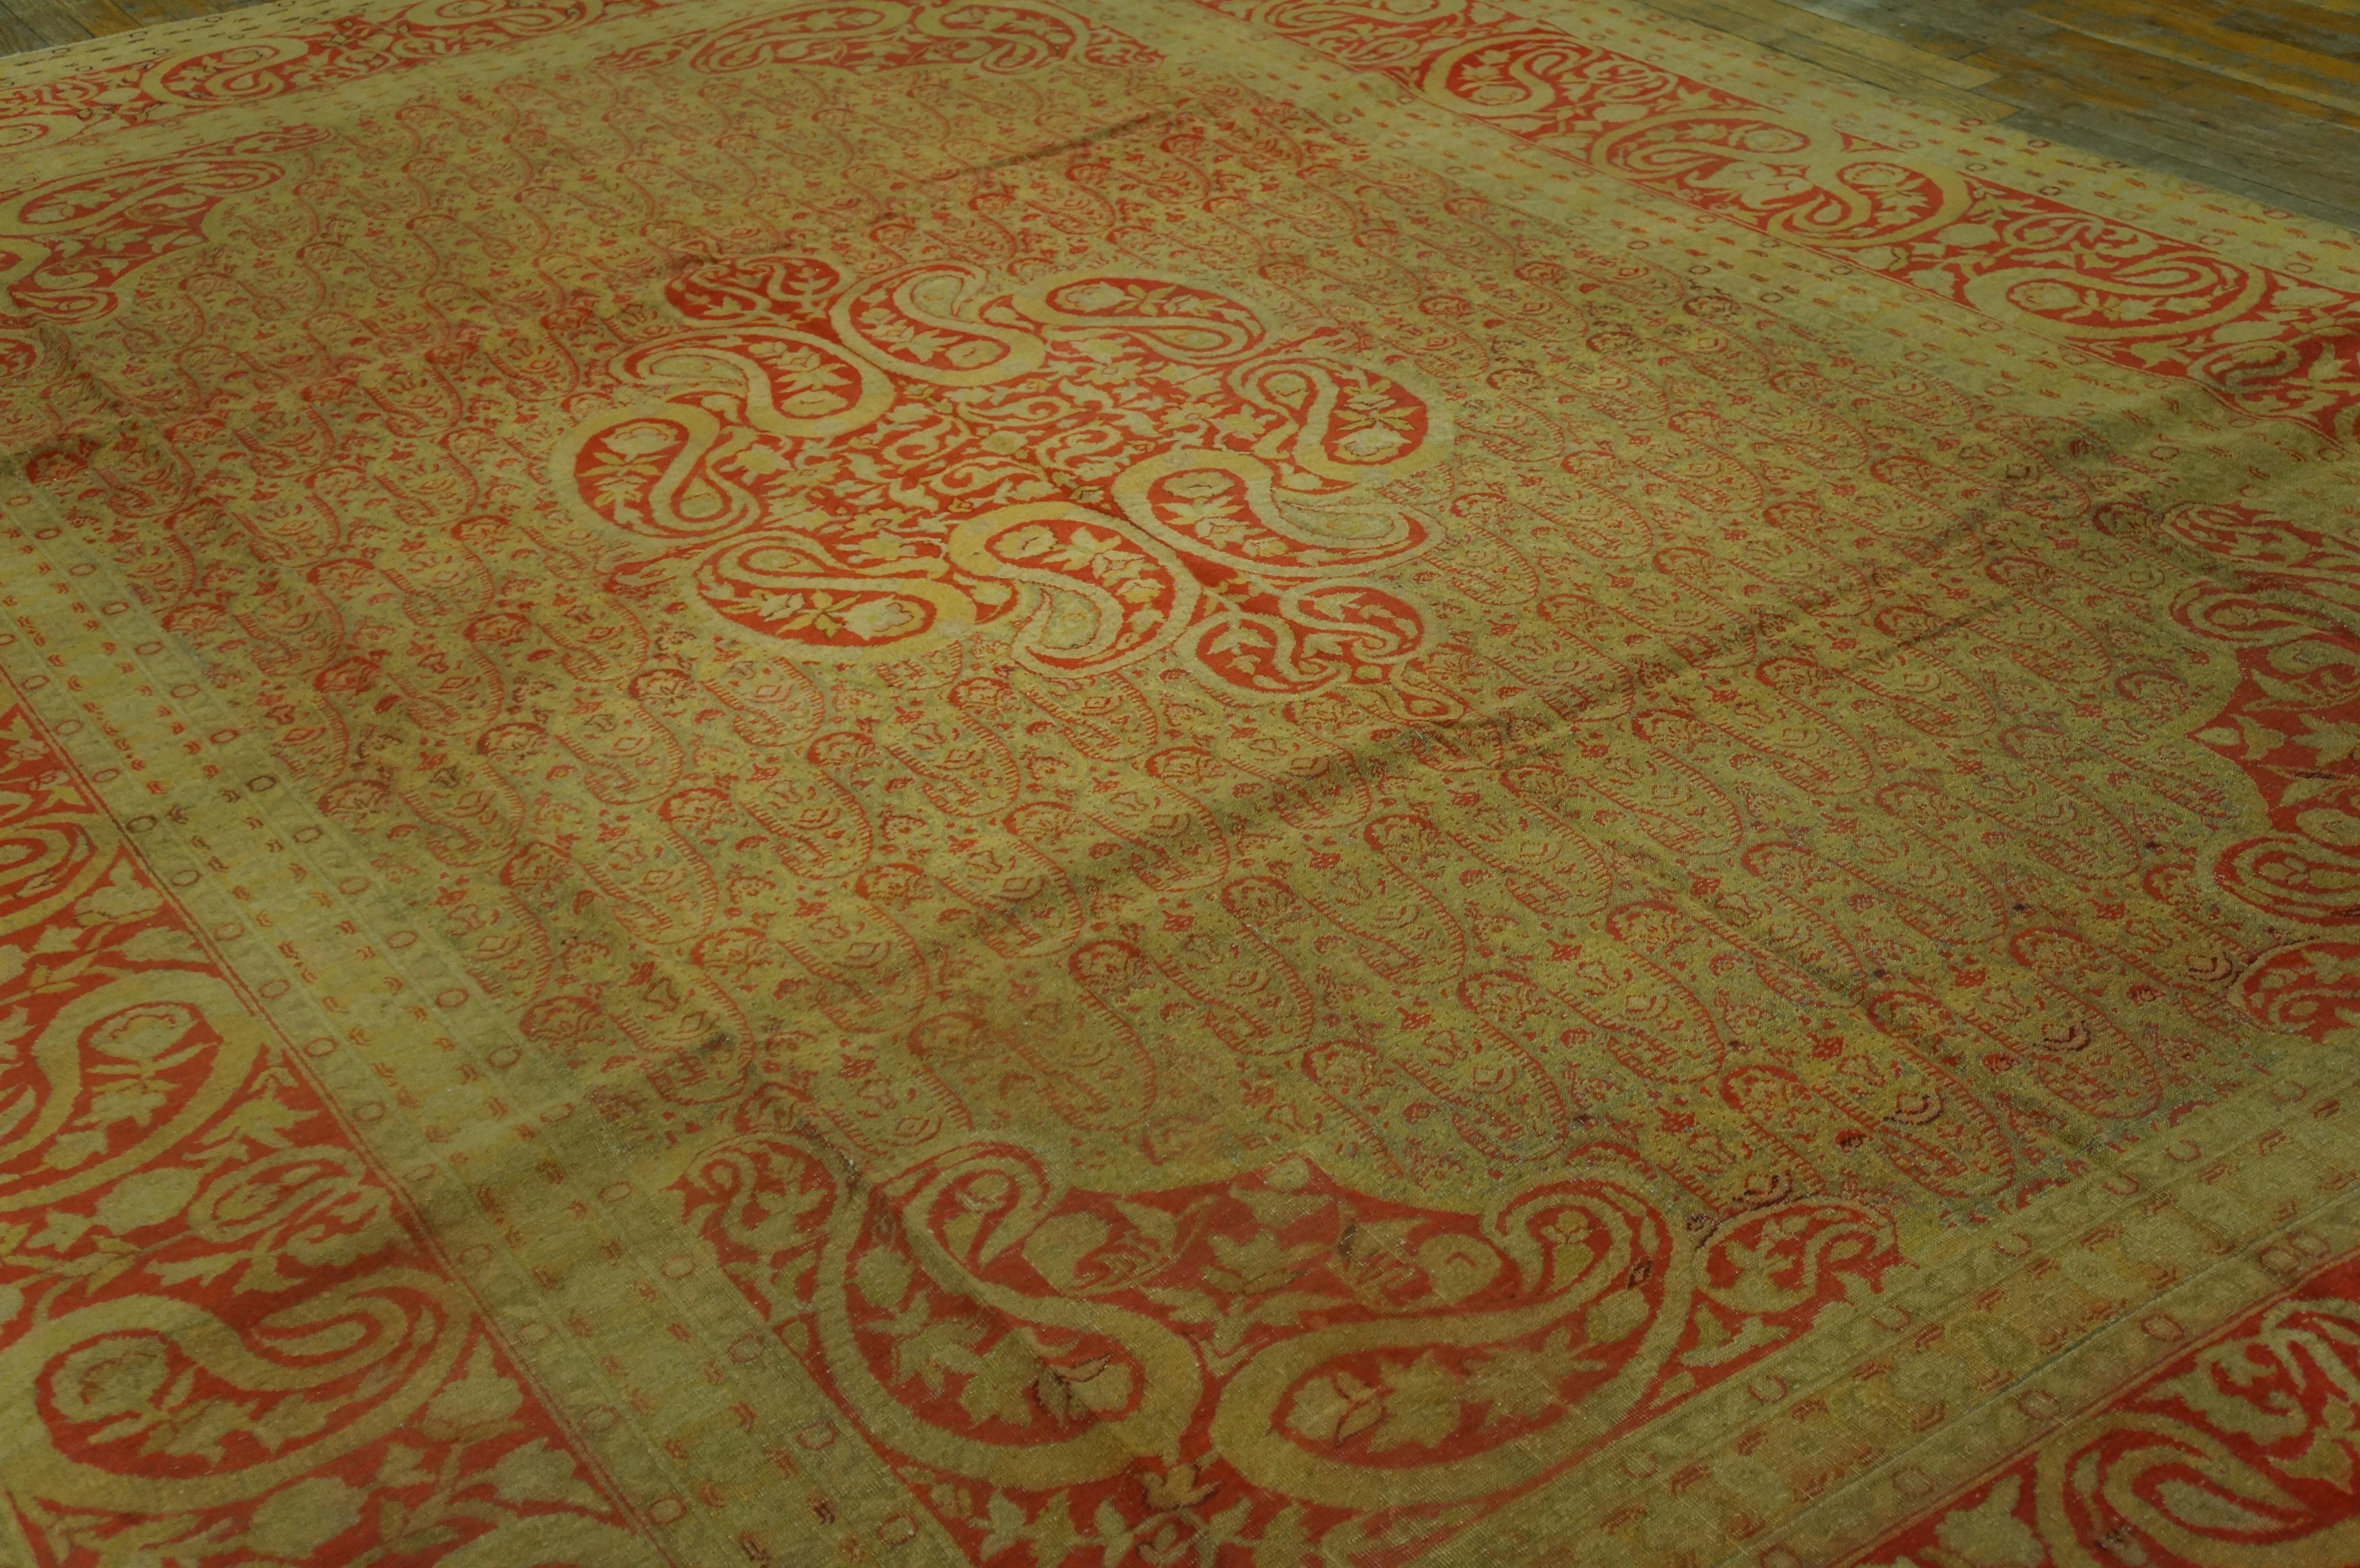 Antique Amritsar rug, measures: 8'2